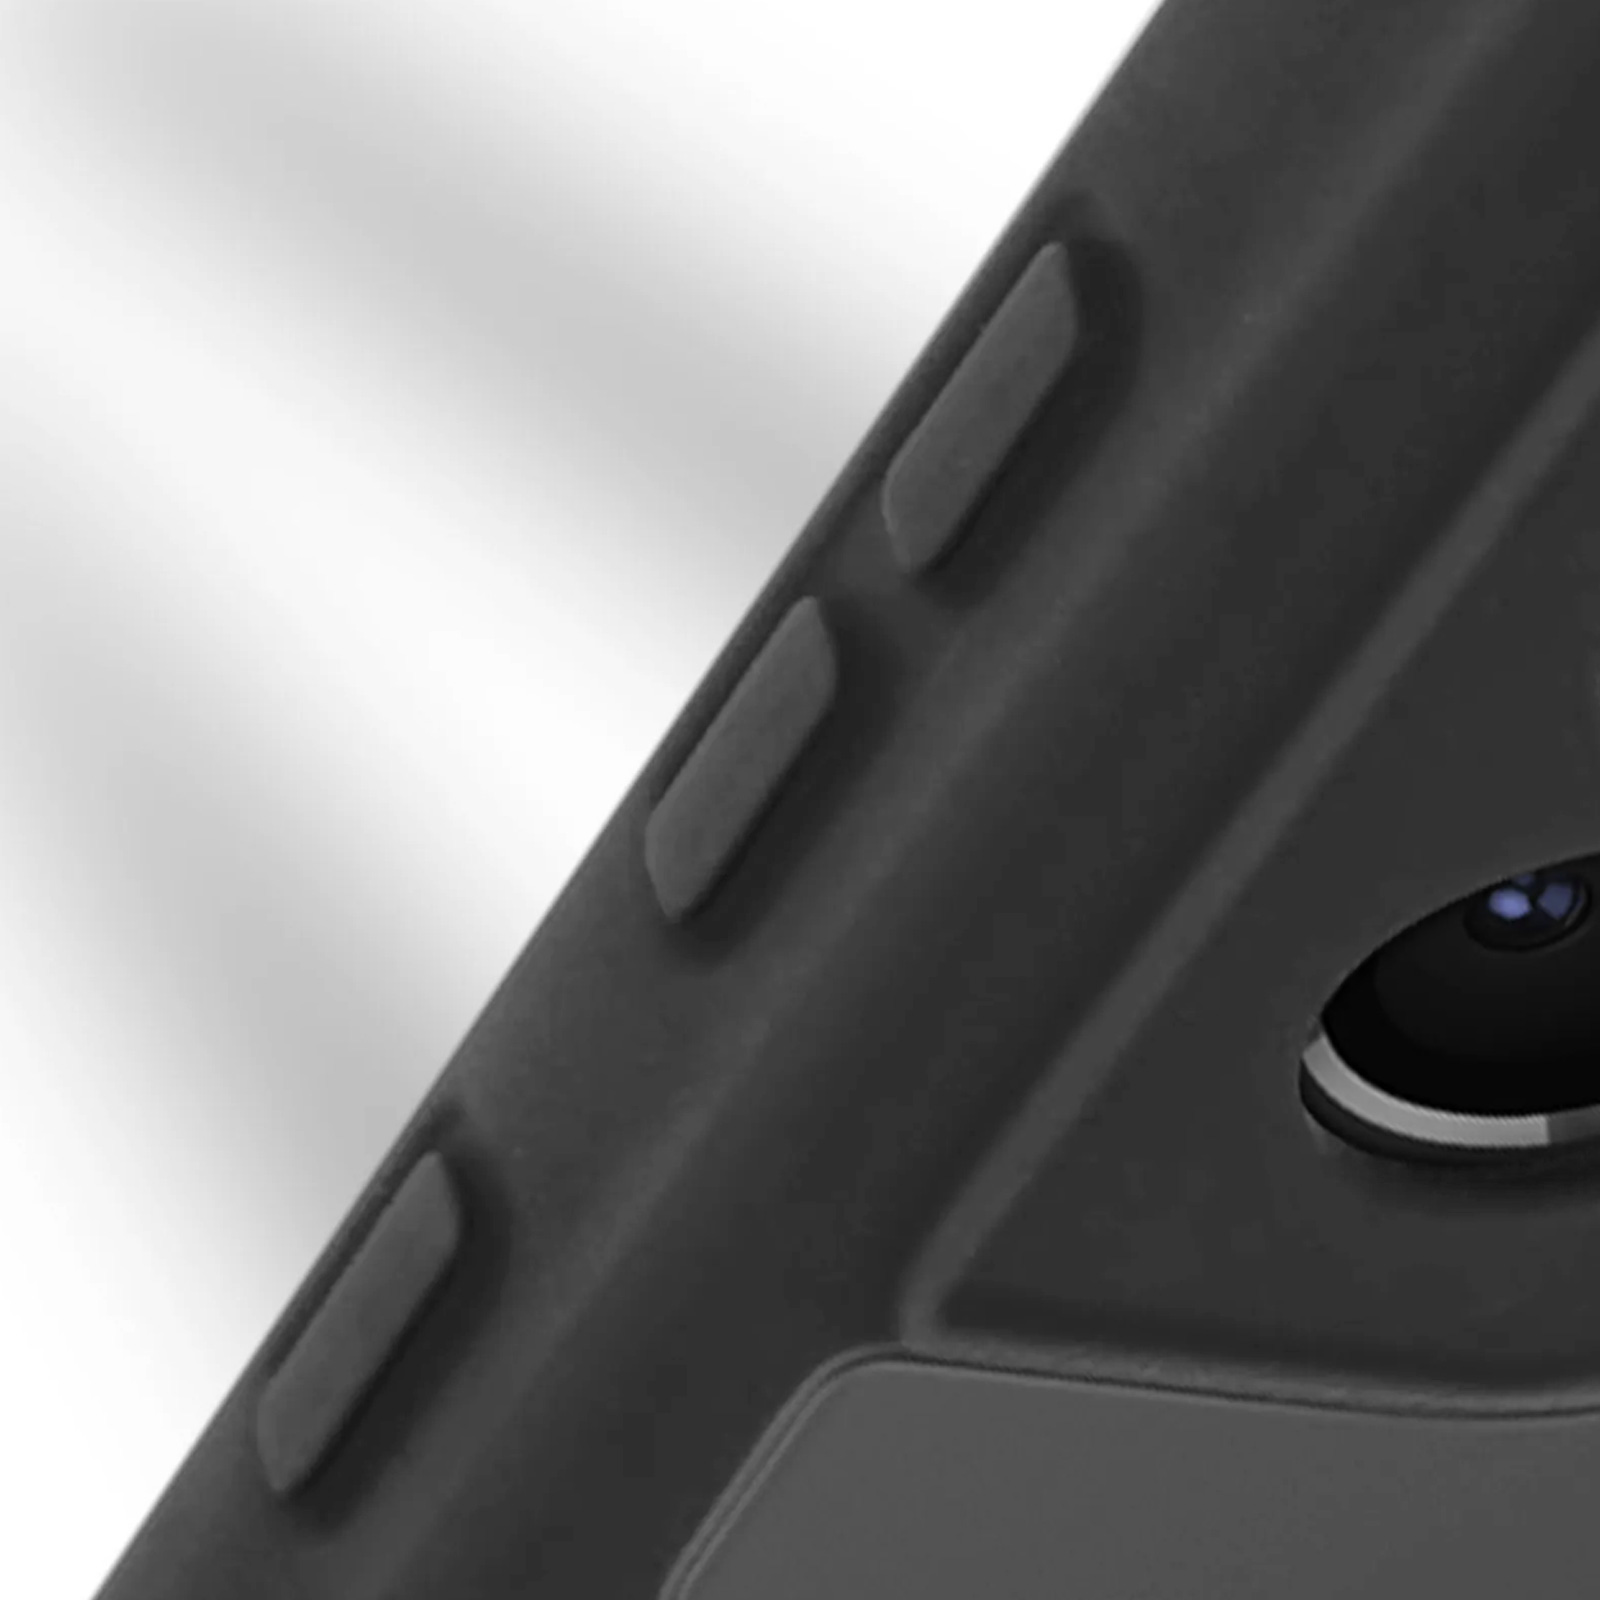 Carcasa Iphone 12 pro max Transparente Antigolpe